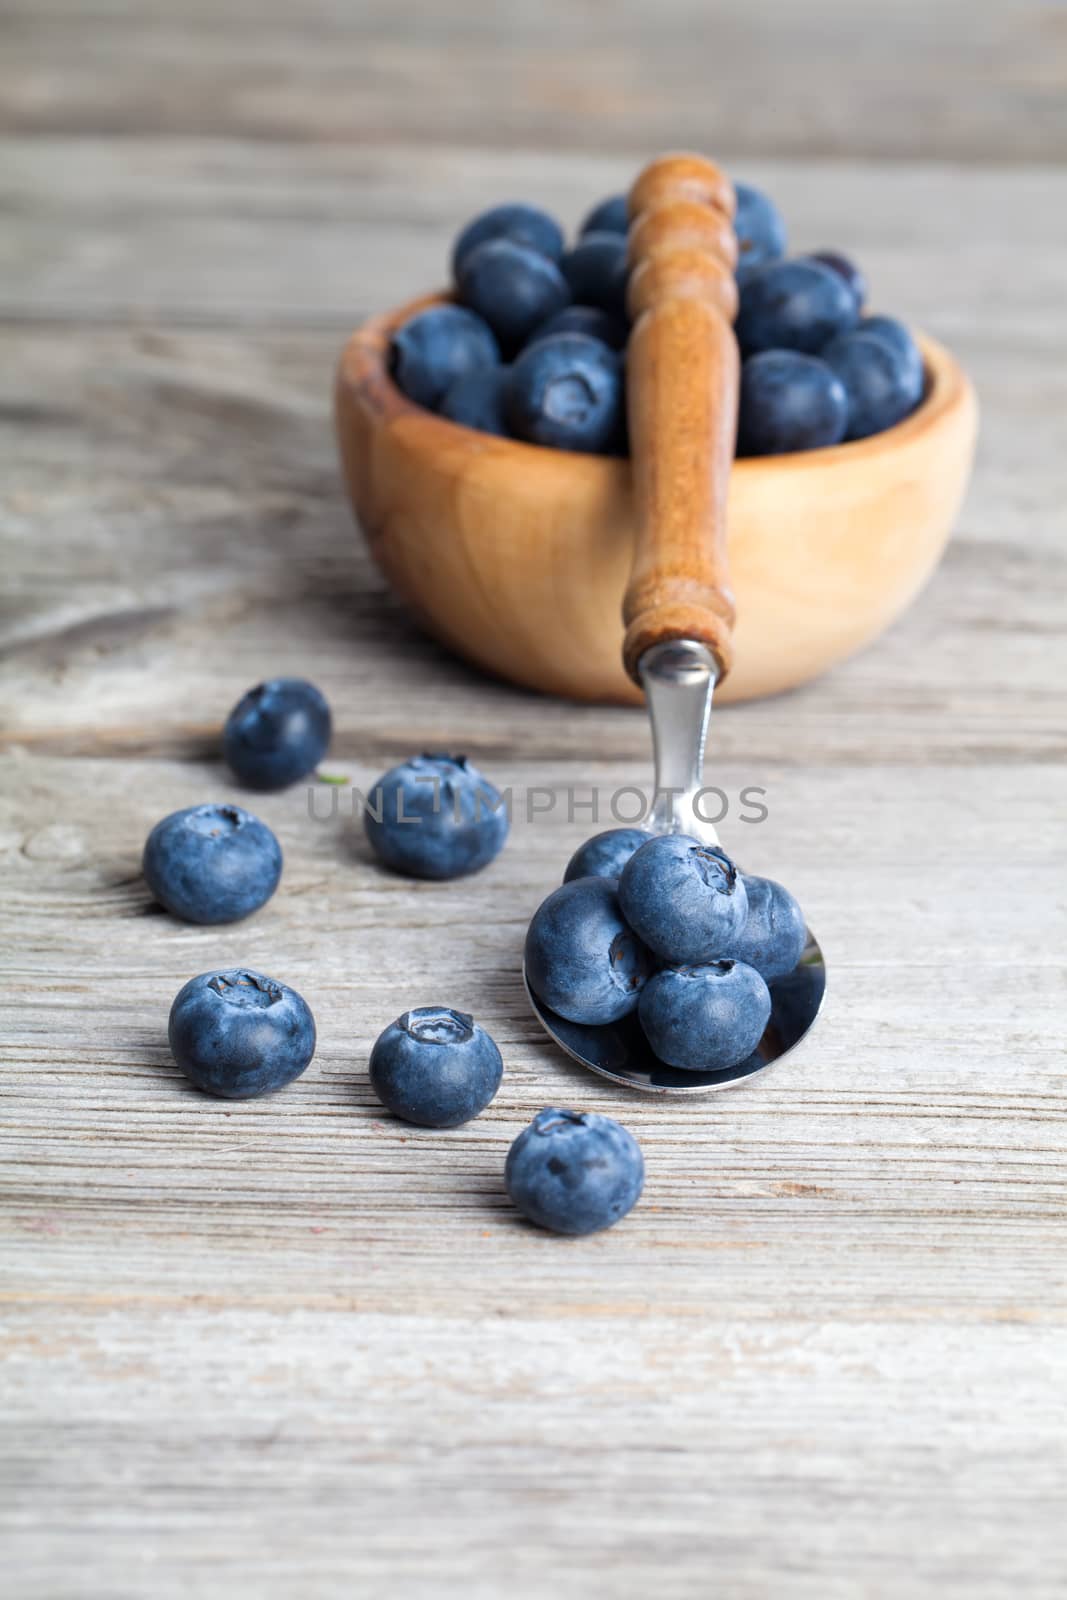 Blueberries on a wooden spoon by motorolka